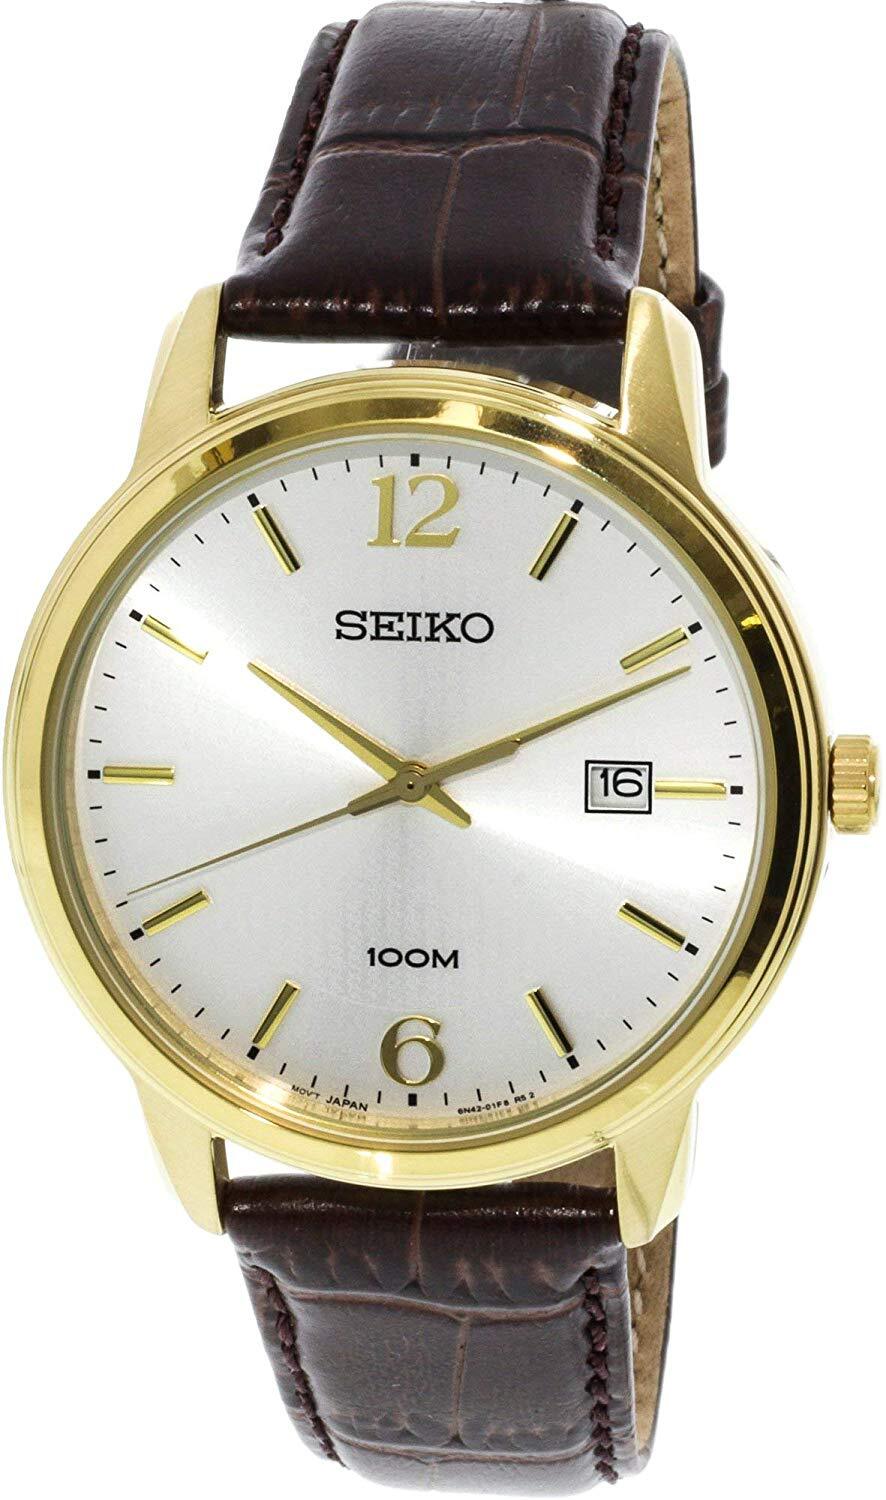 Đồng hồ nam Seiko SUR266P1